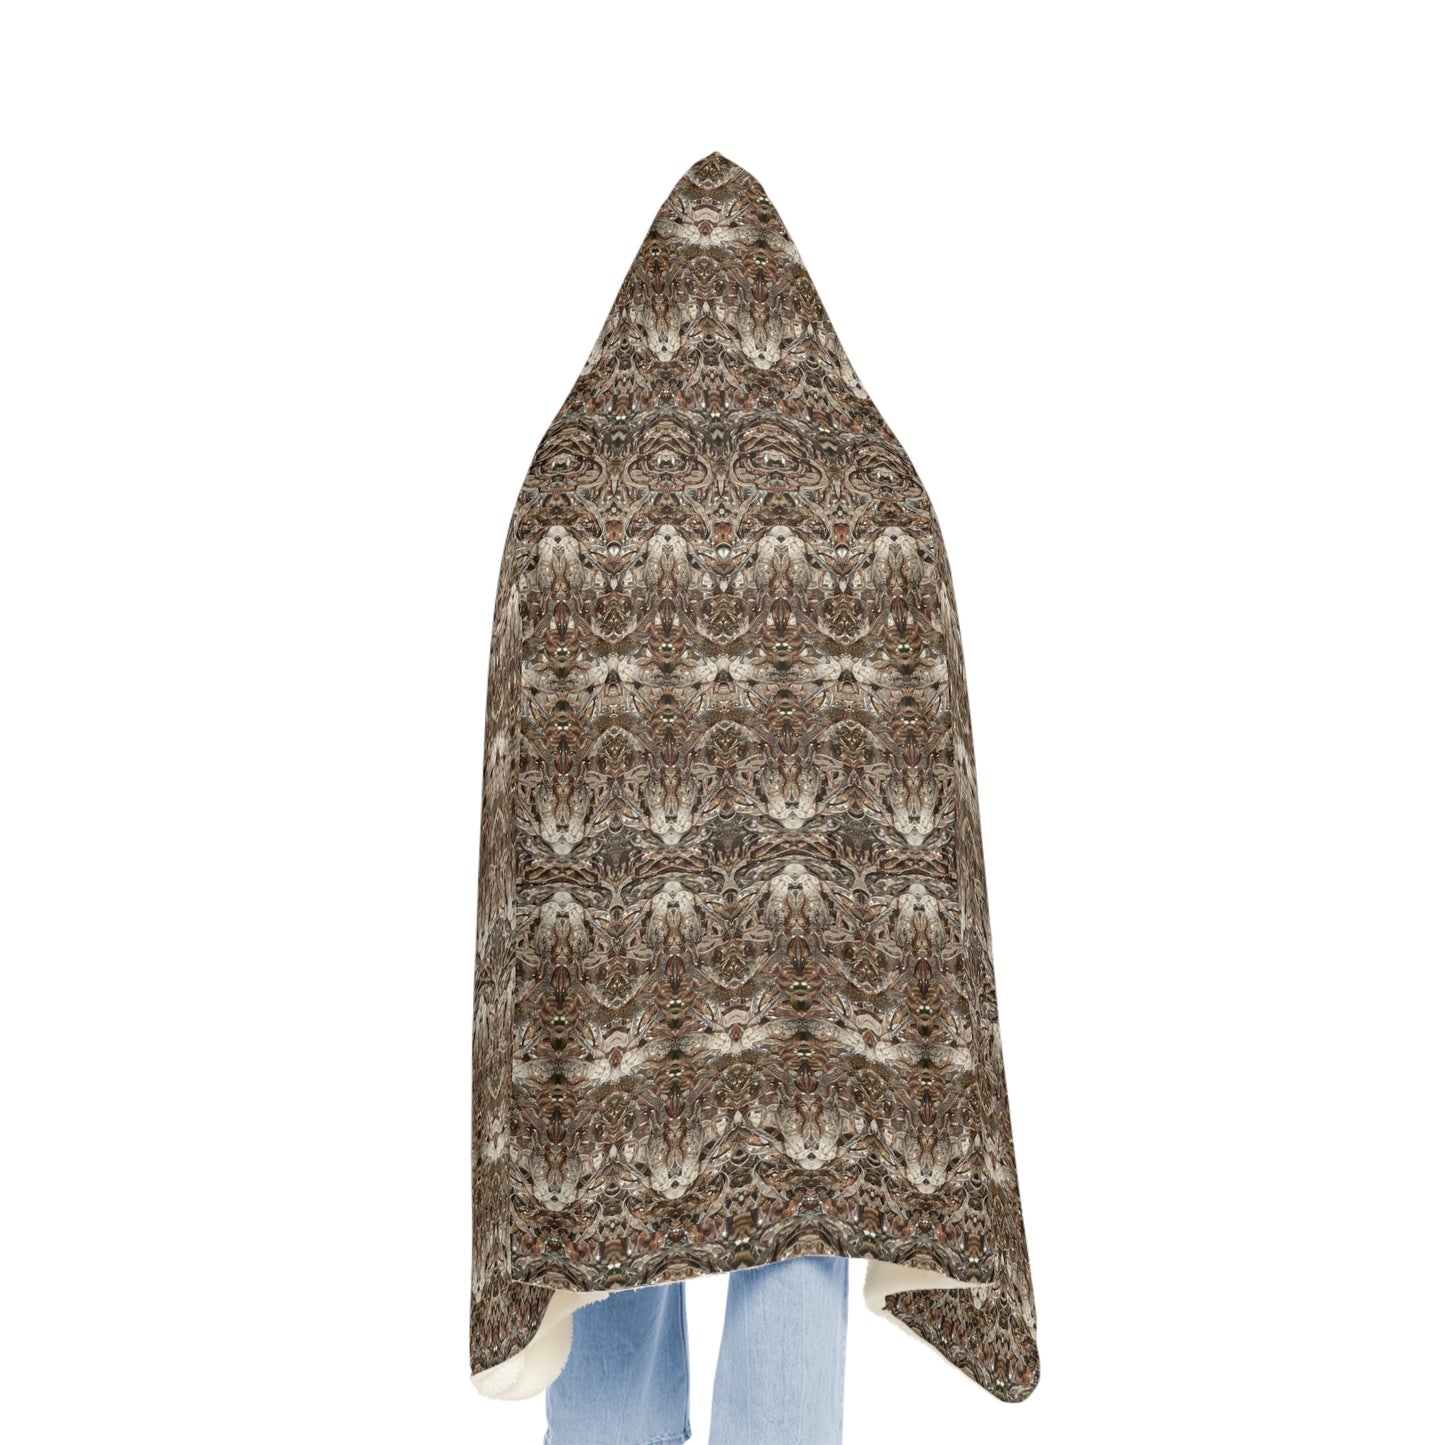 Hooded Snuggle Blanket (Samhain Dream Thaw 10/15 (Decem ex quindecim) RJSTHw2023 RJS